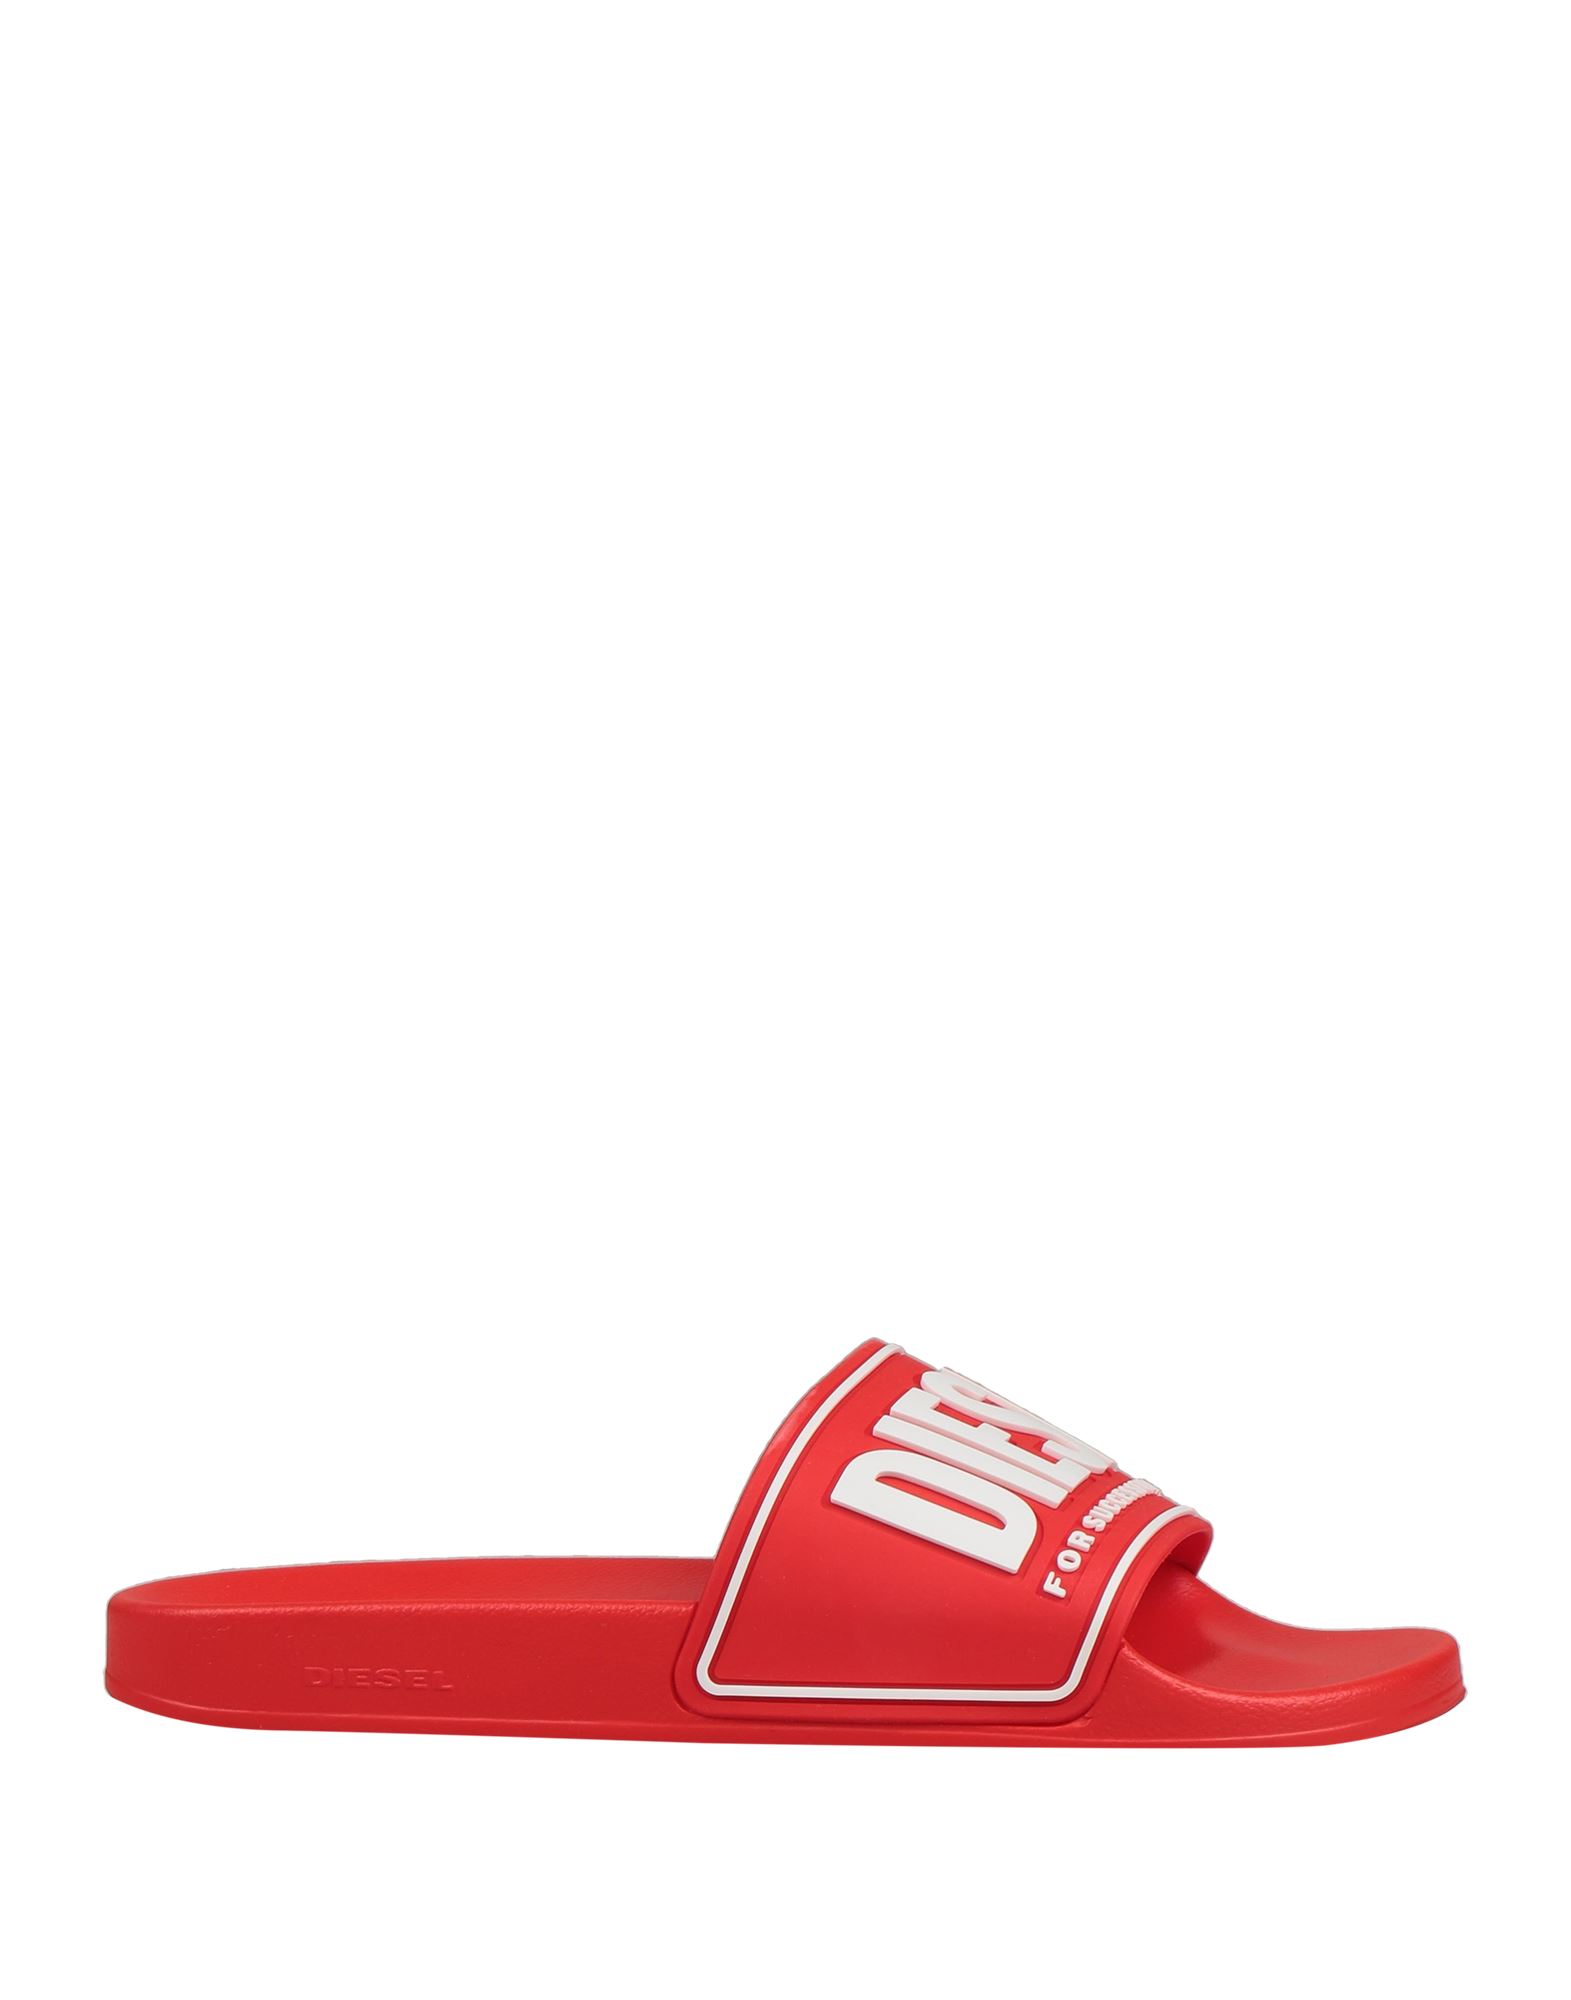 Diesel Sandals In Red